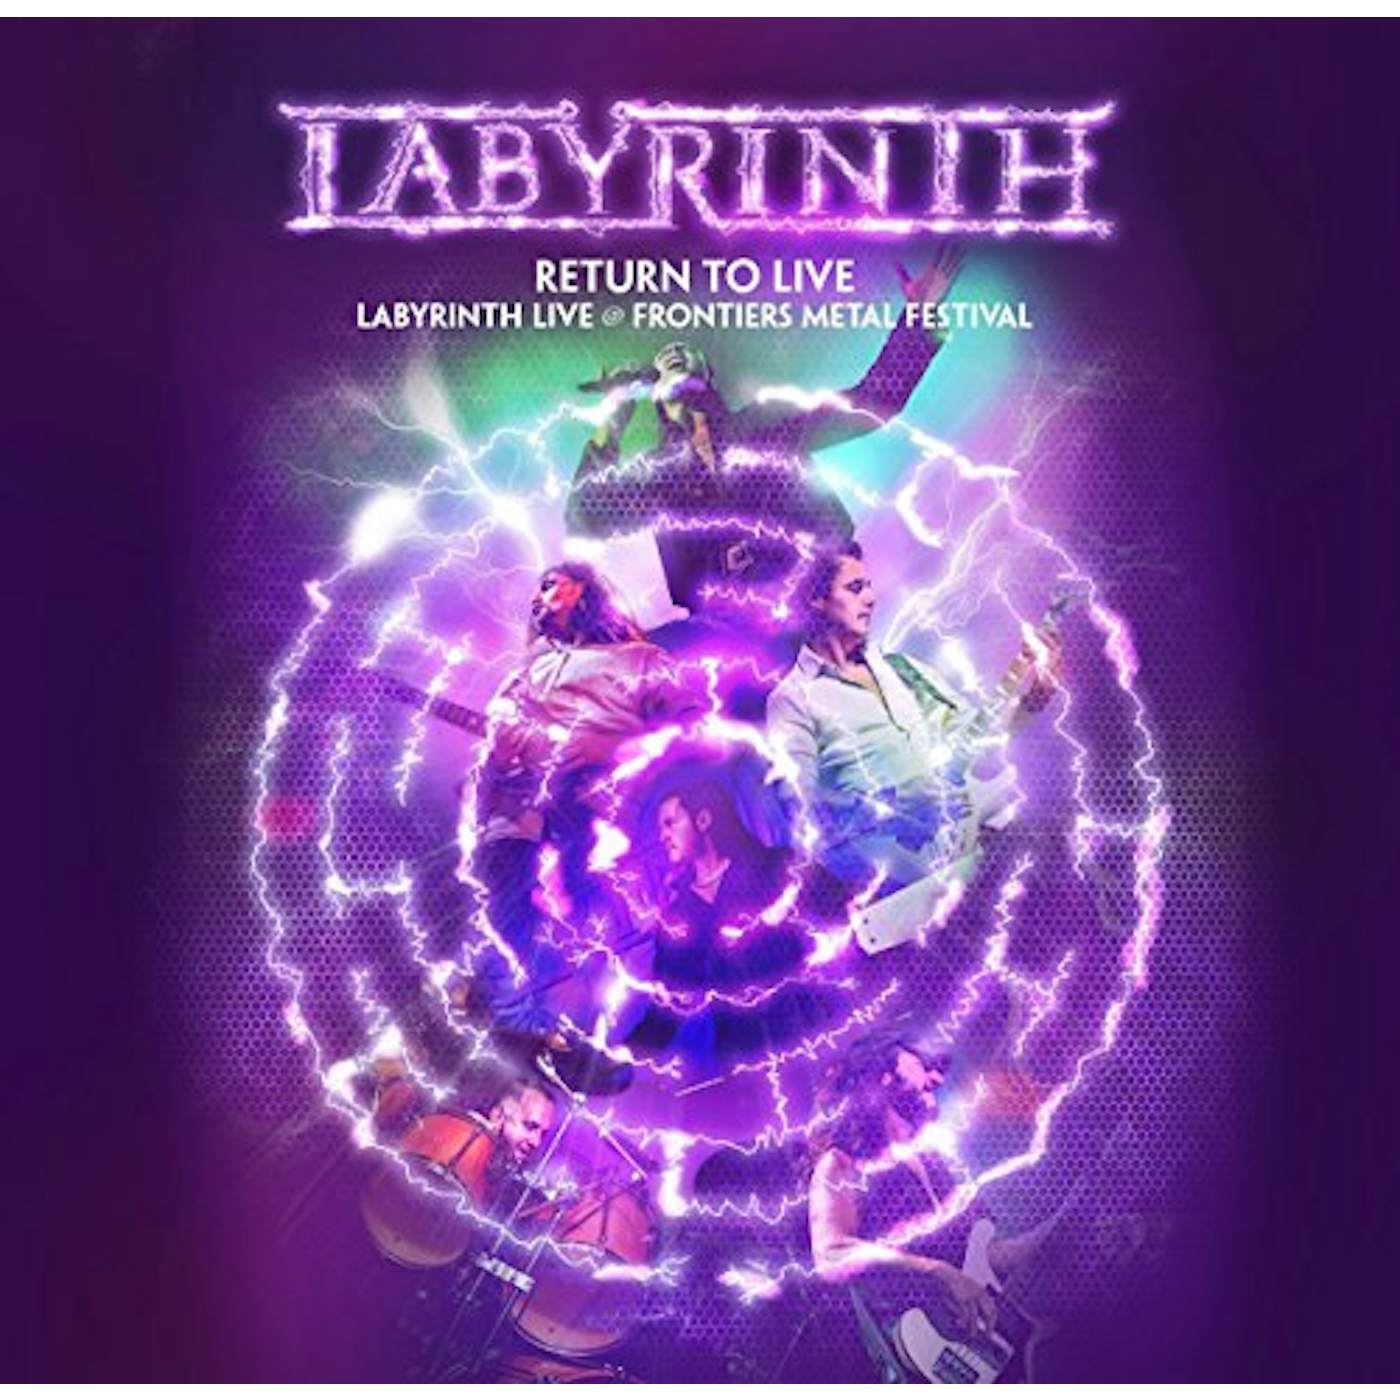 Labyrinth Return to Live Vinyl Record